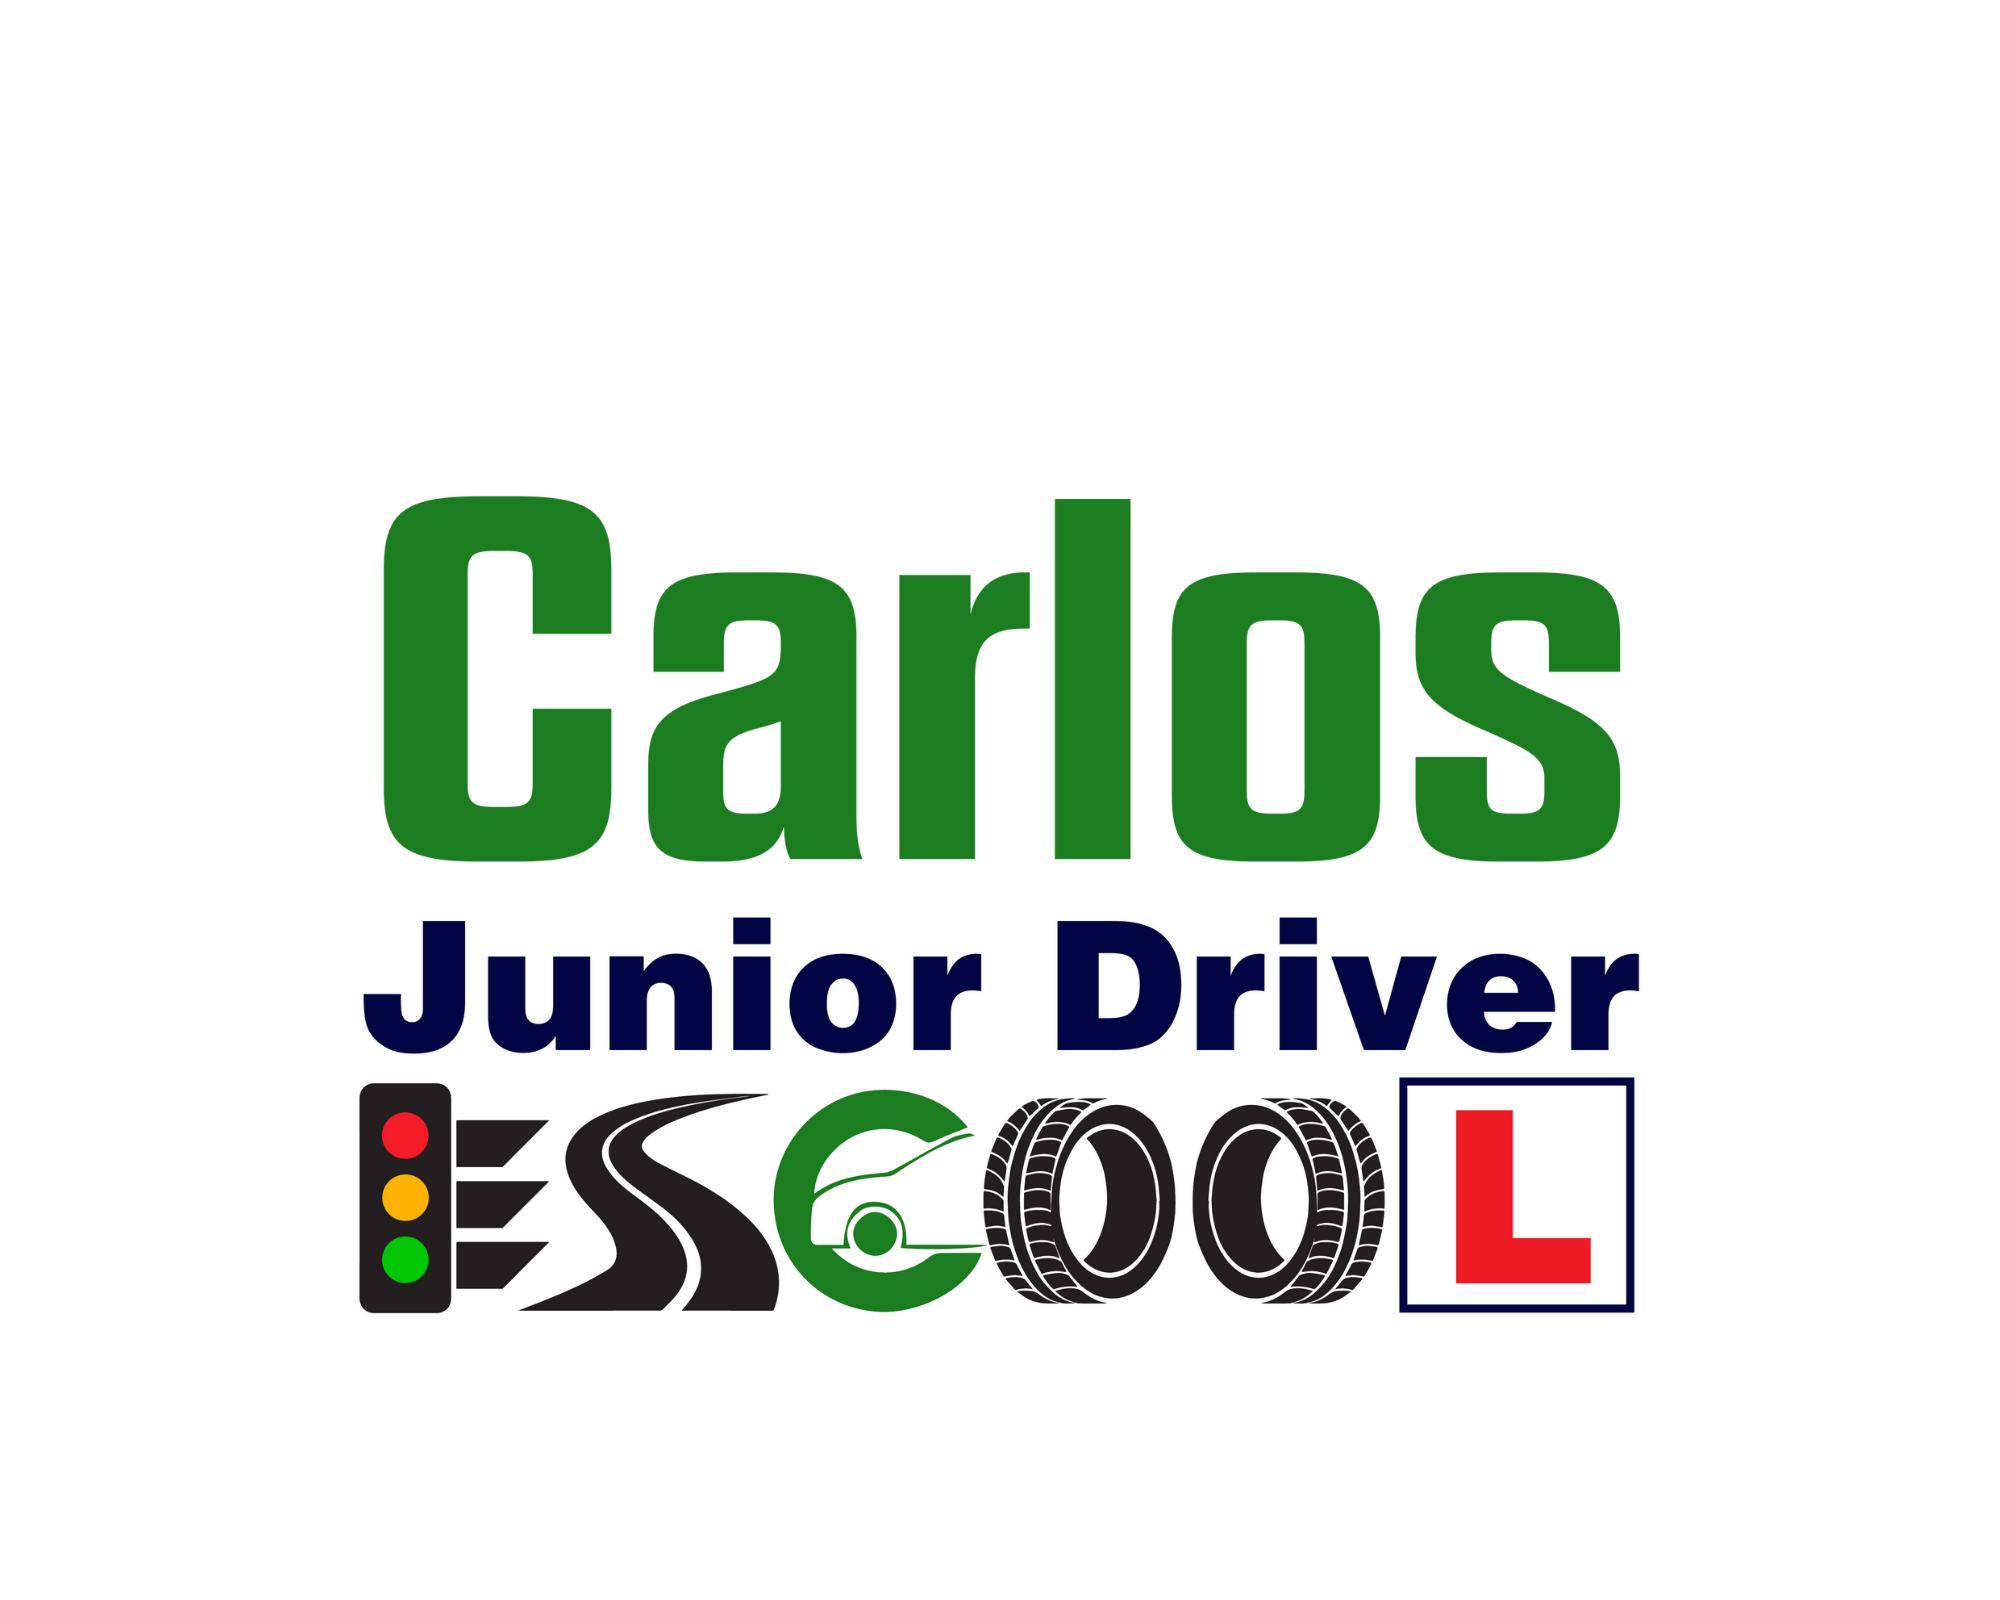 Carlos Junior Drivers Escool